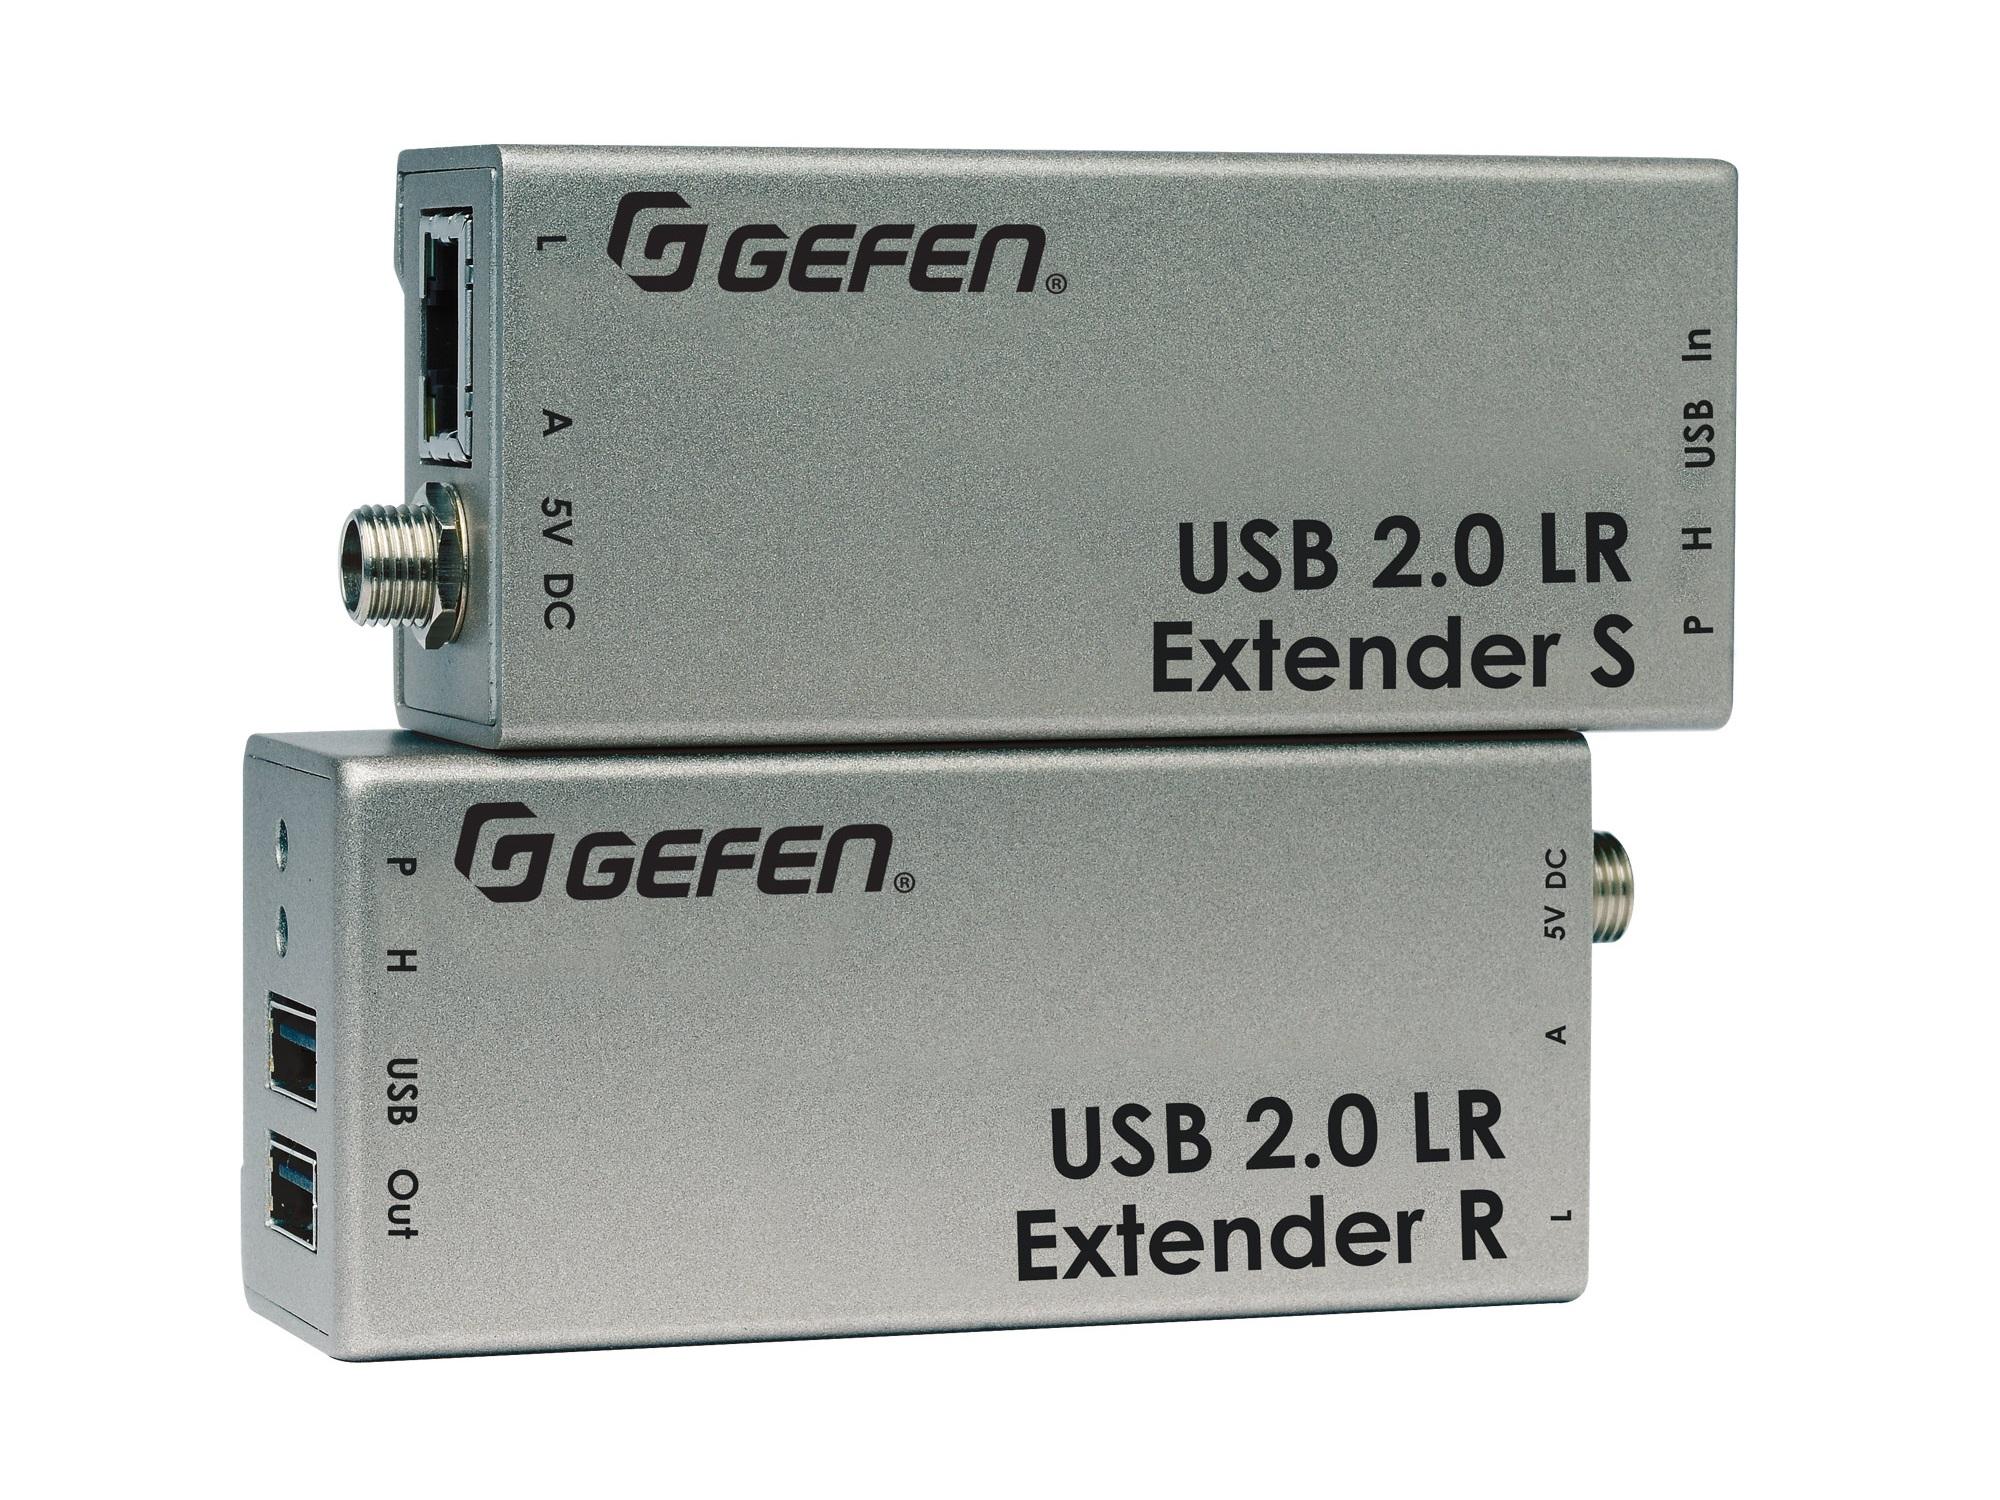 Gefen EXT-USB2.0-LR-b USB 2.0 Extender (Transmitter/Receiver) Kit